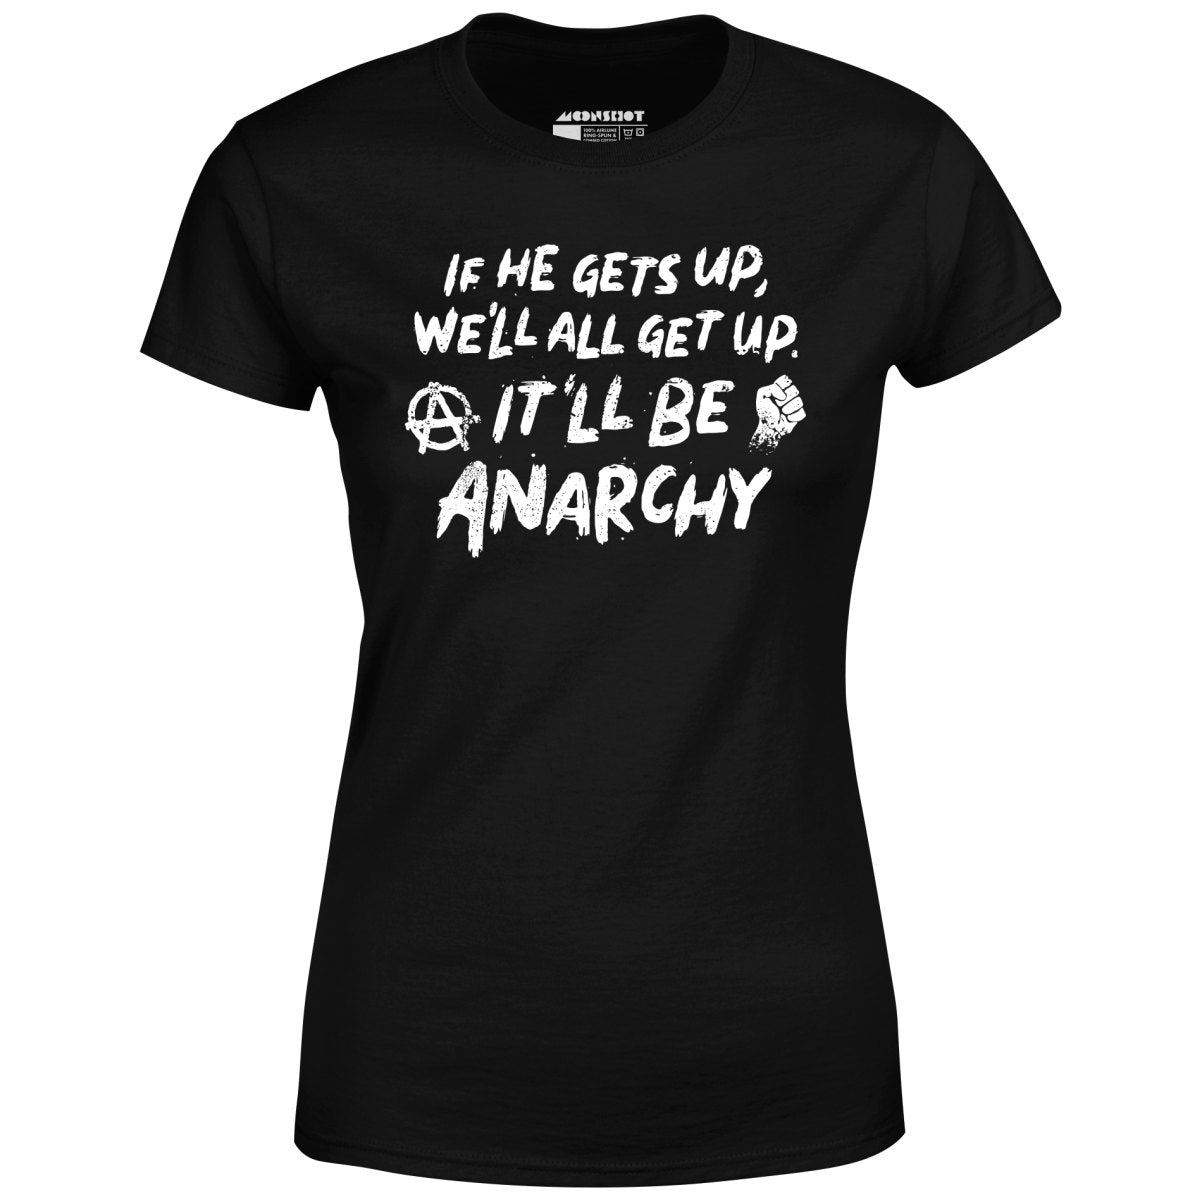 It'll Be Anarchy - Women's T-Shirt